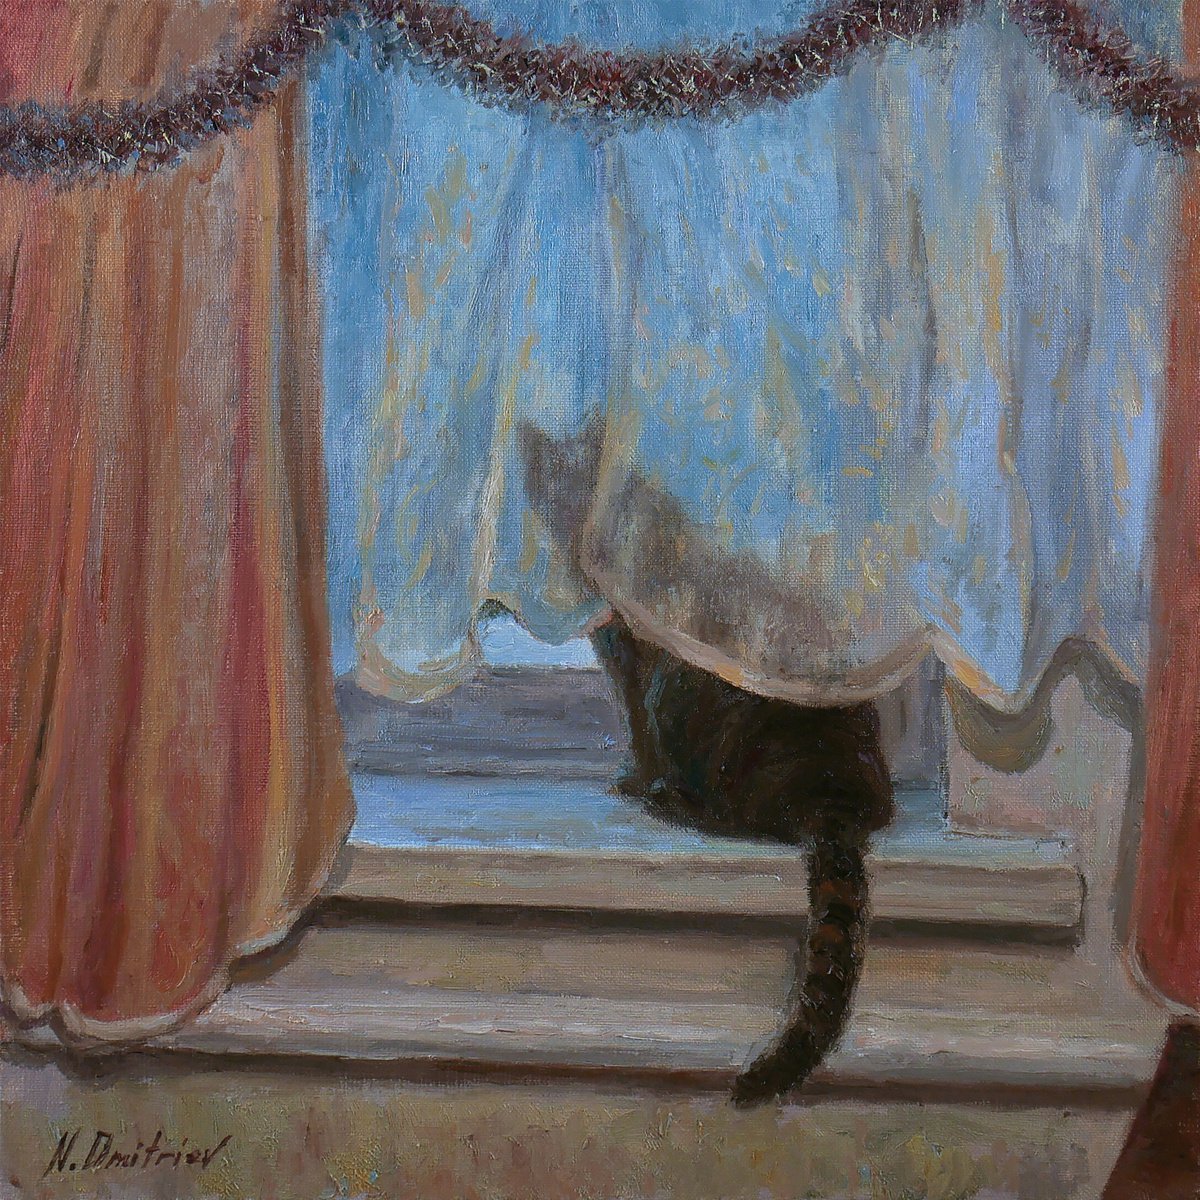 Cat Waiting For Christmas - original oil painting - gift, wall art, interior art, interior design, stylish art, impressionist, present, cat, animal, pet